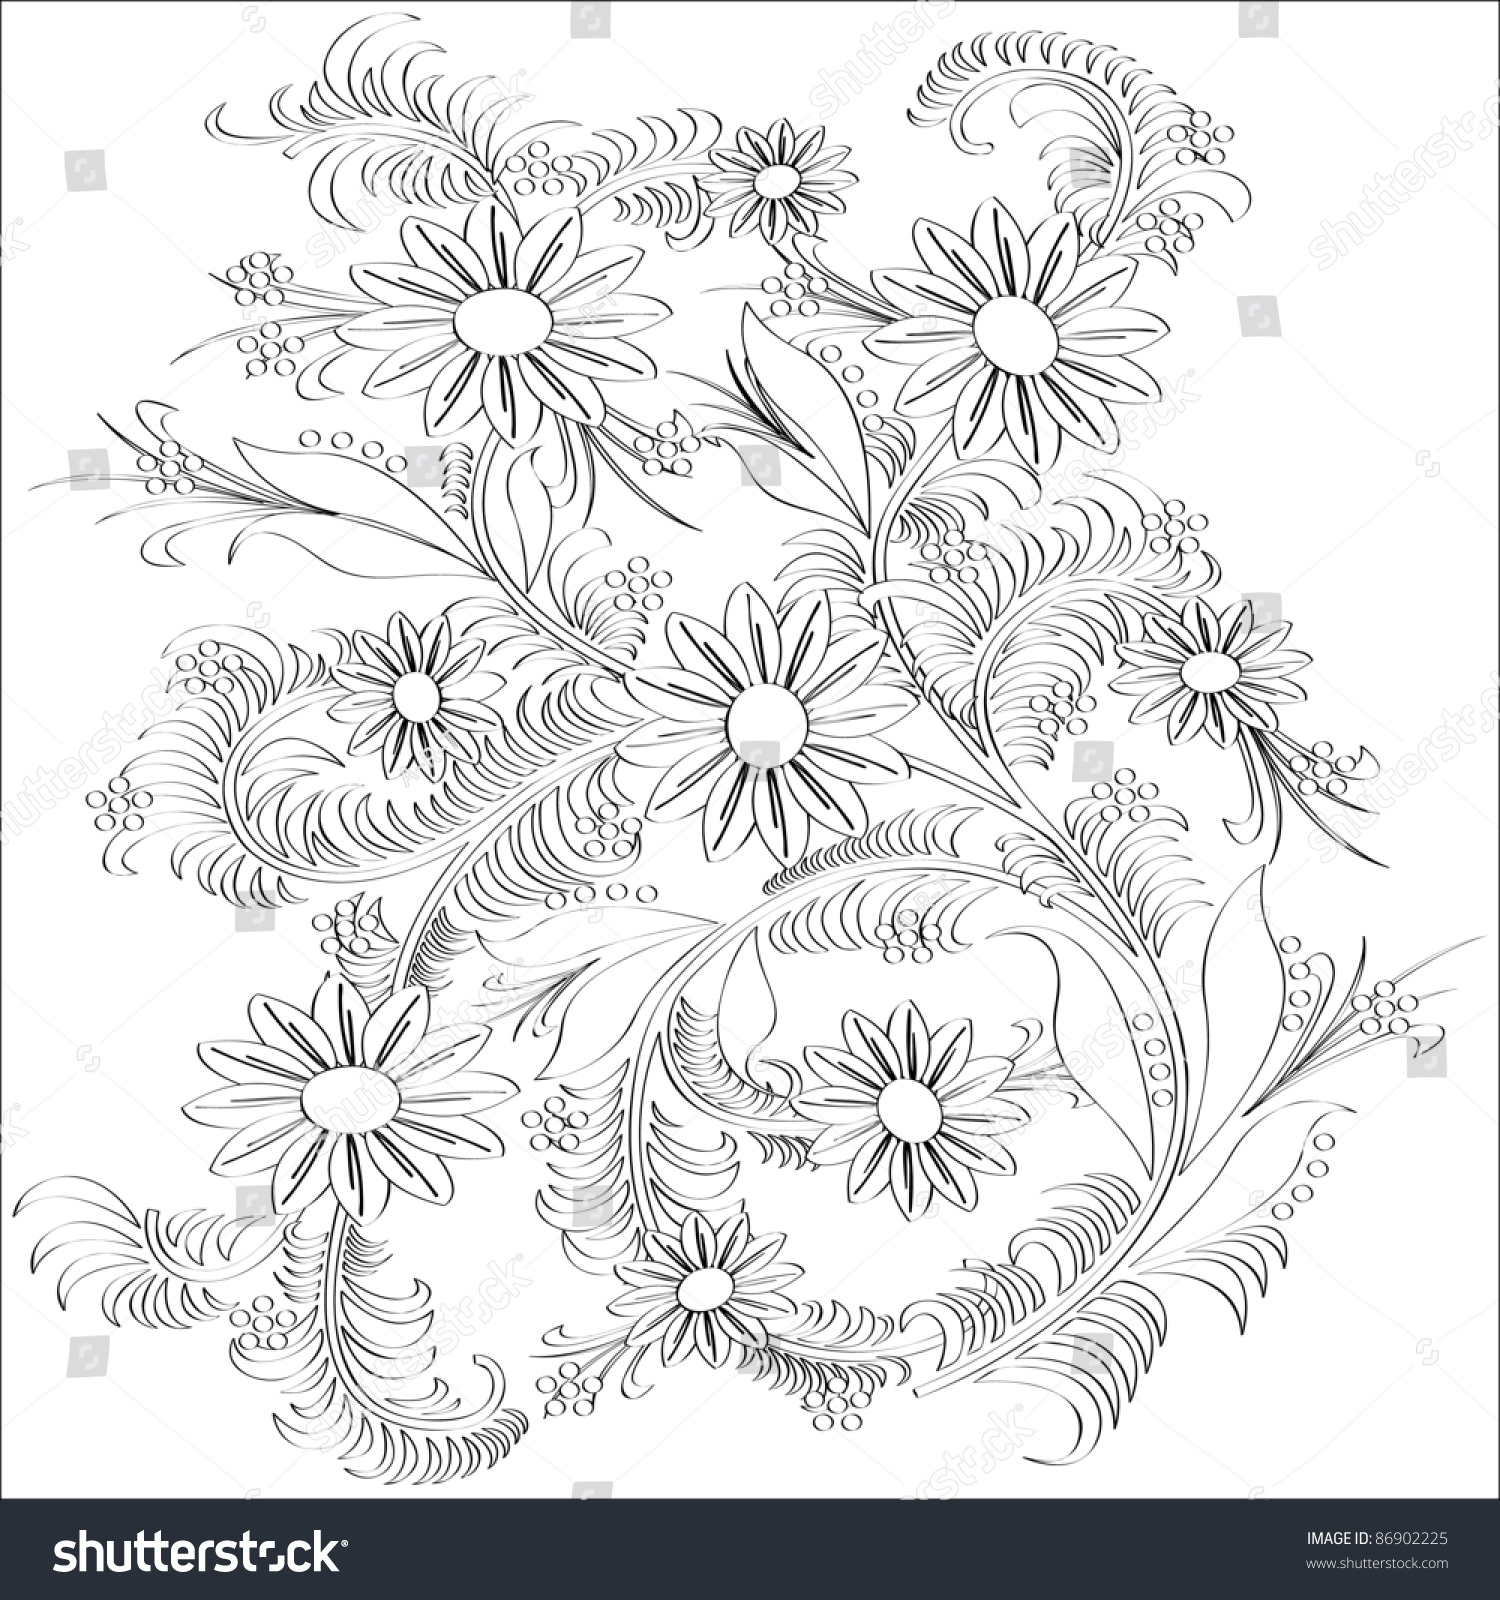 Handdrawn Line Art Flower Designvector Illustration Stock Vector